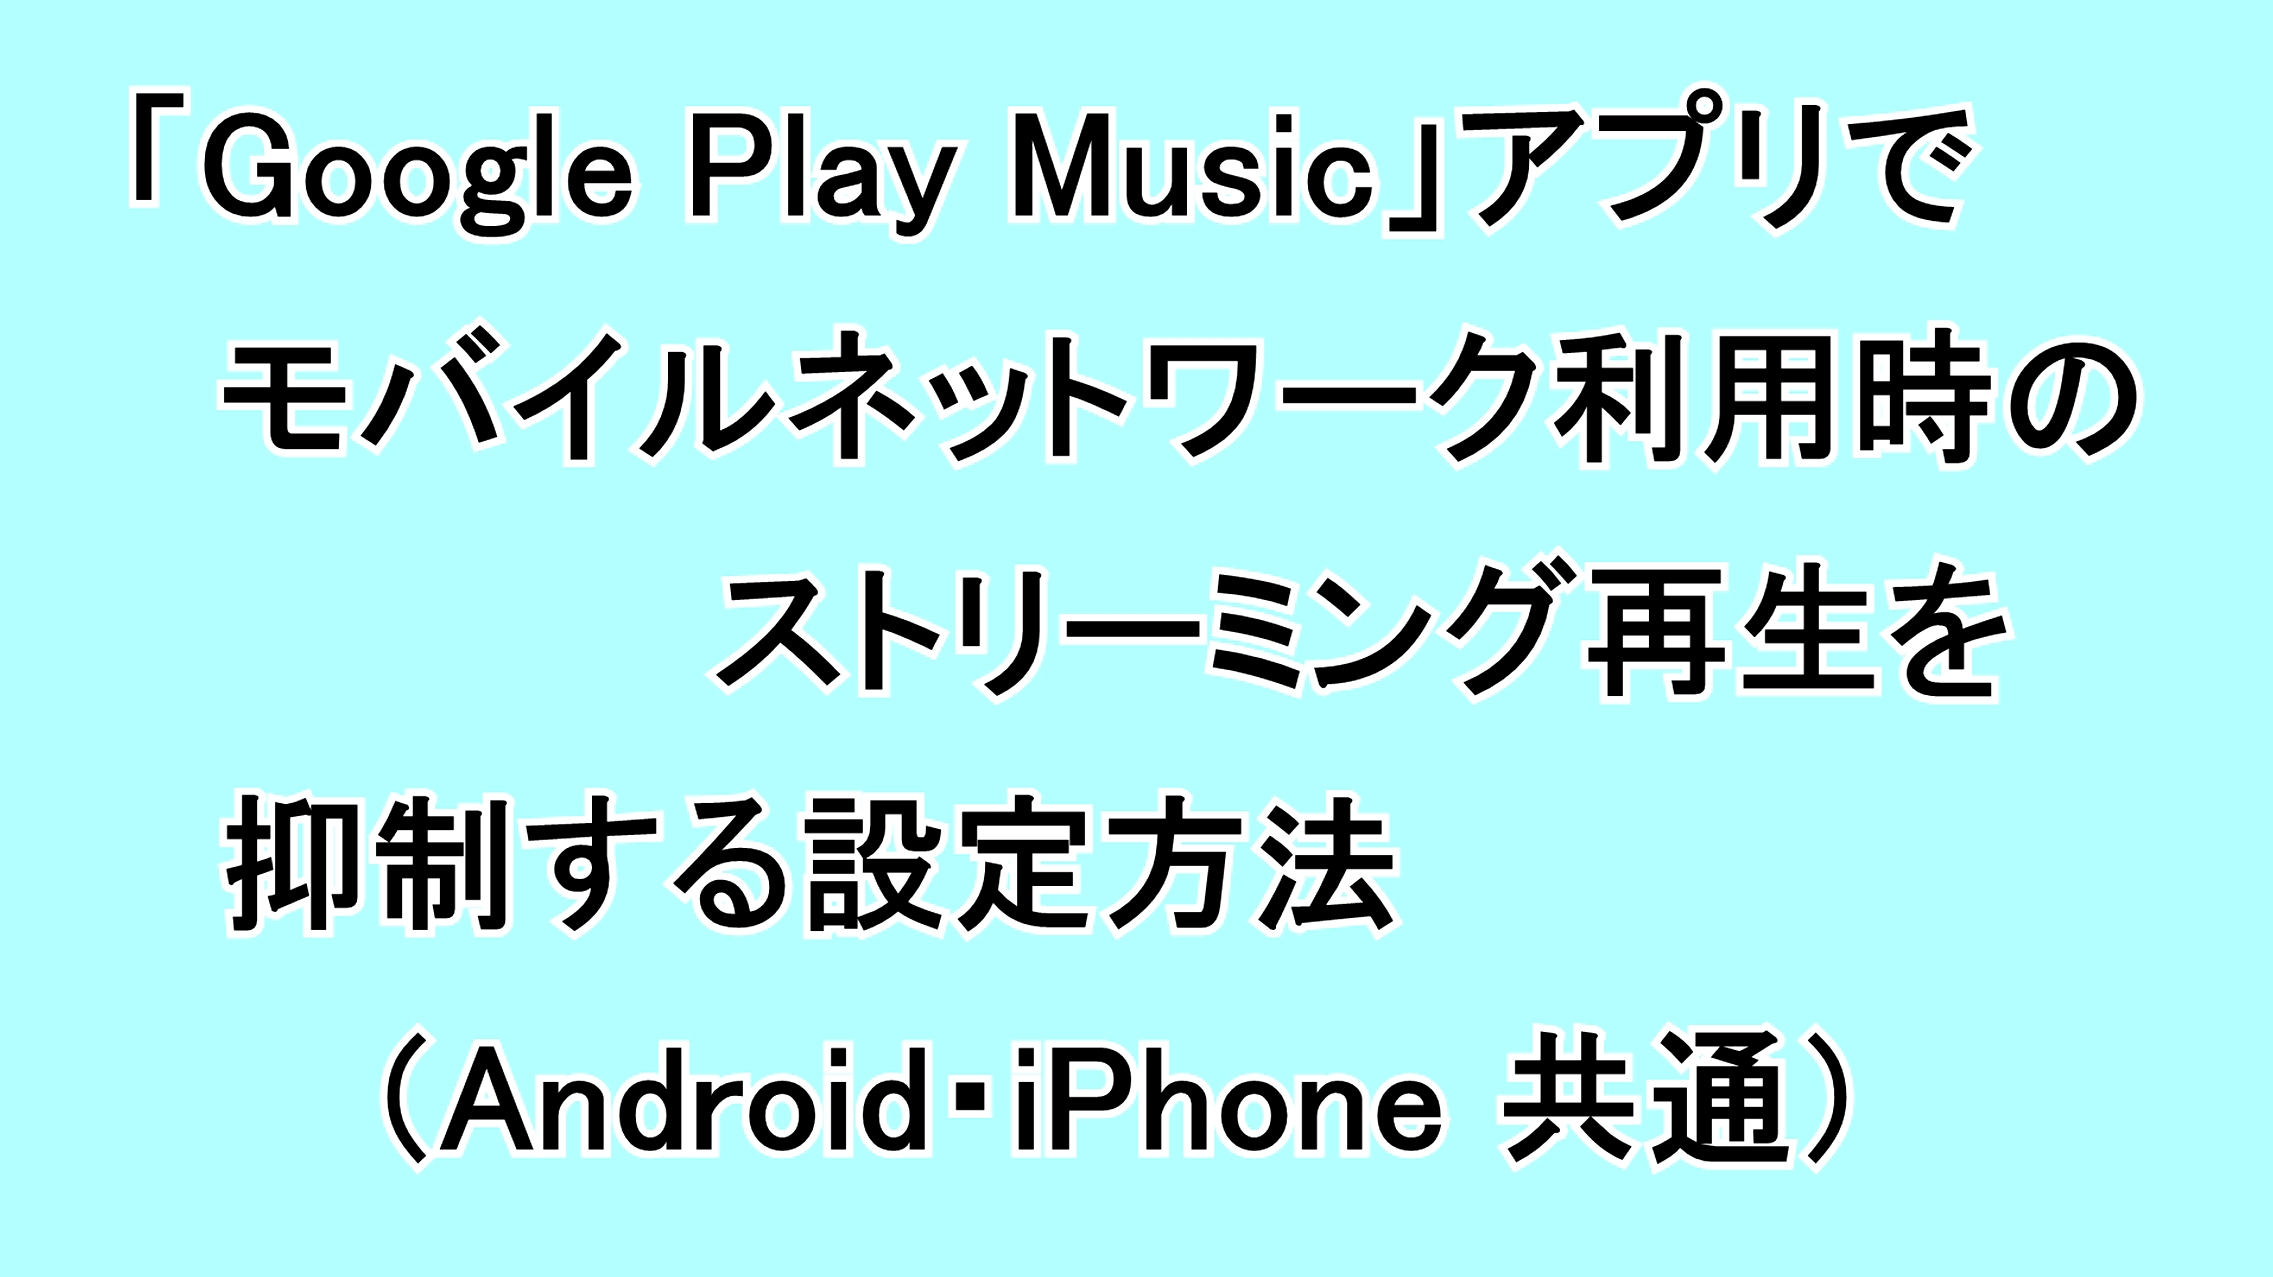 「Google Play Music」アプリでモバイルネットワーク利用時のストリーミング再生を抑制する設定方法